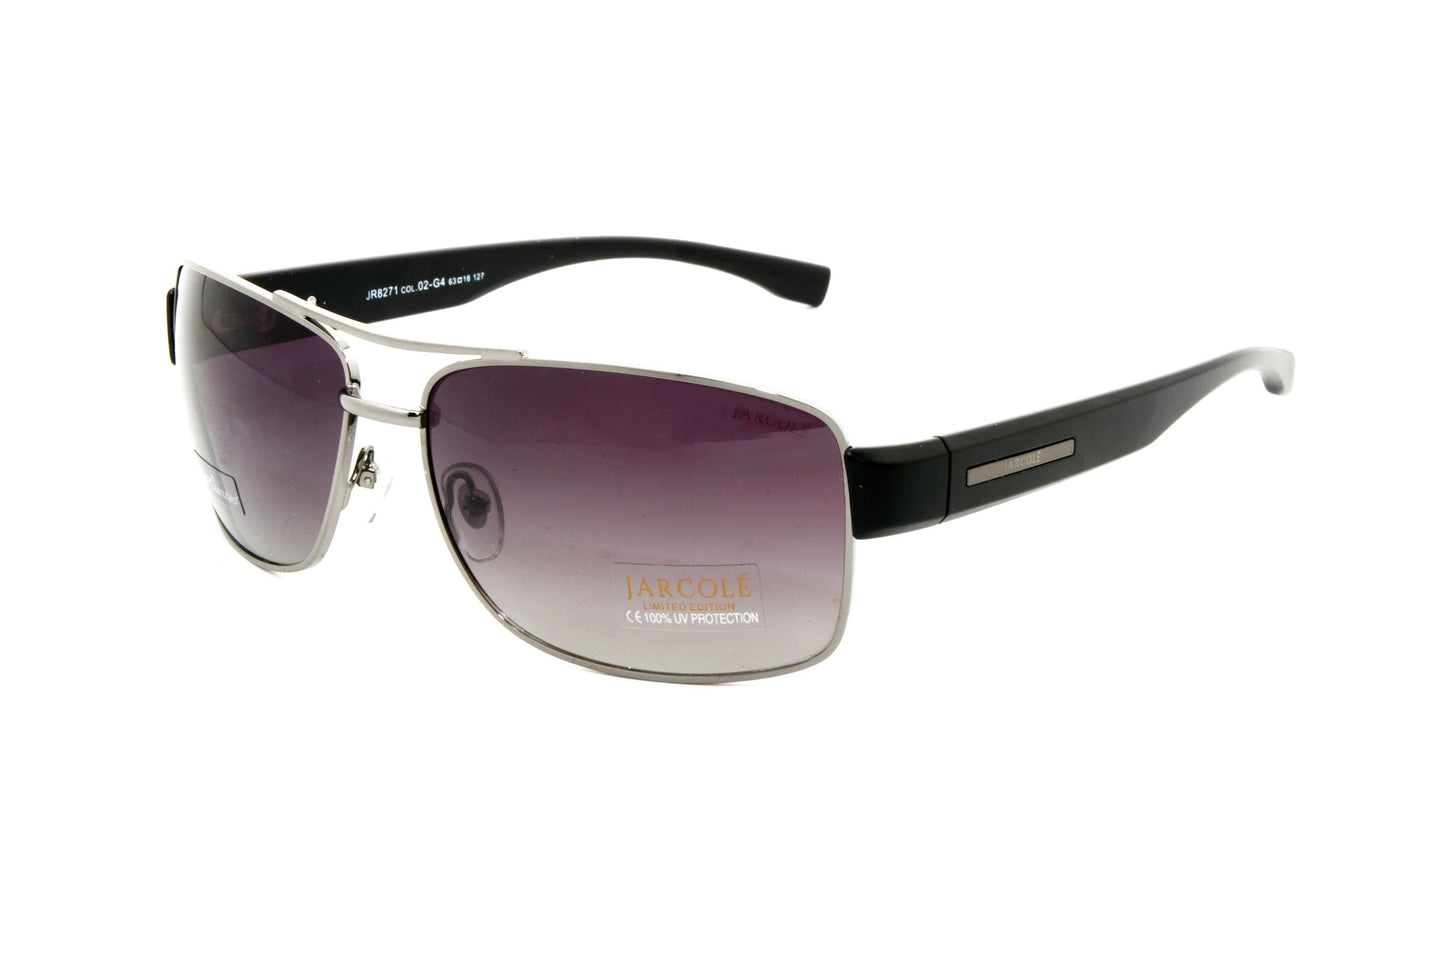 Jarcole sunglasses JR8271 02-G4